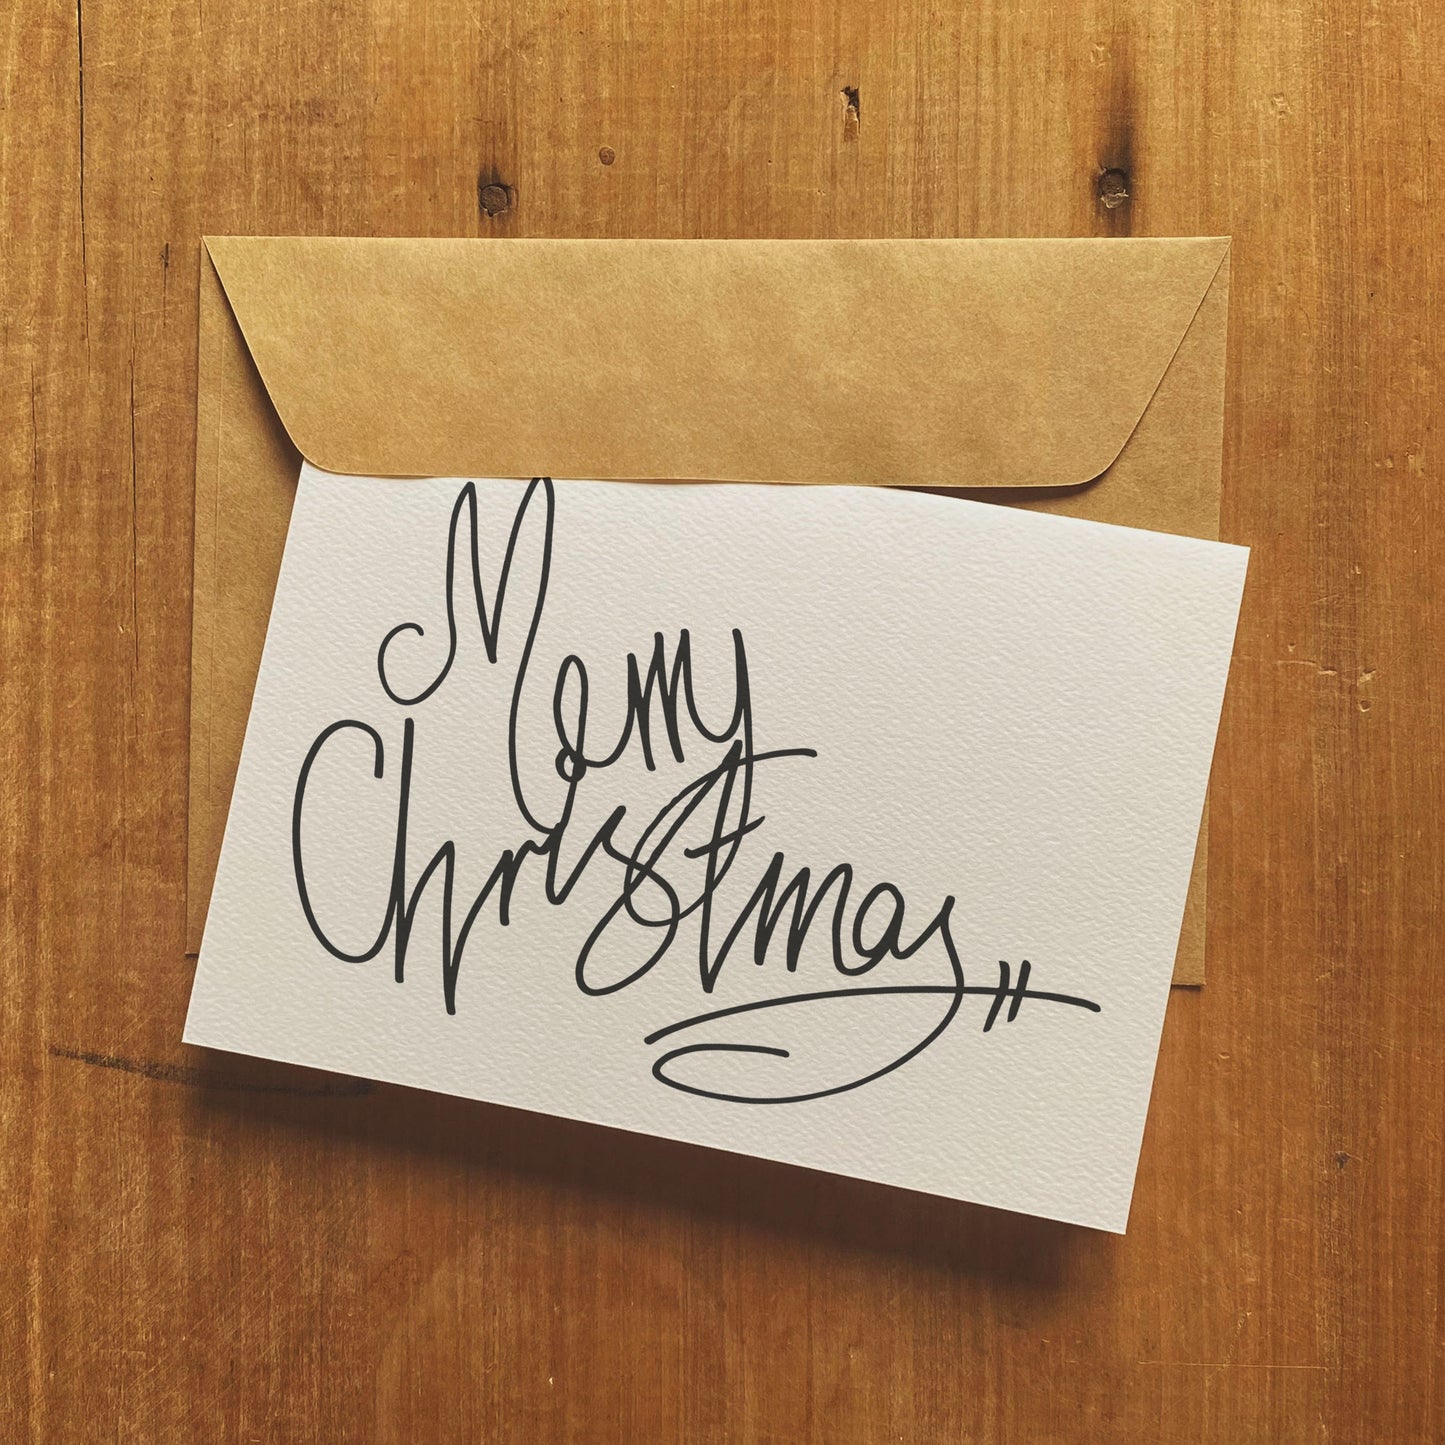 Merry Christmas Scribble - Christmas Greeting Card